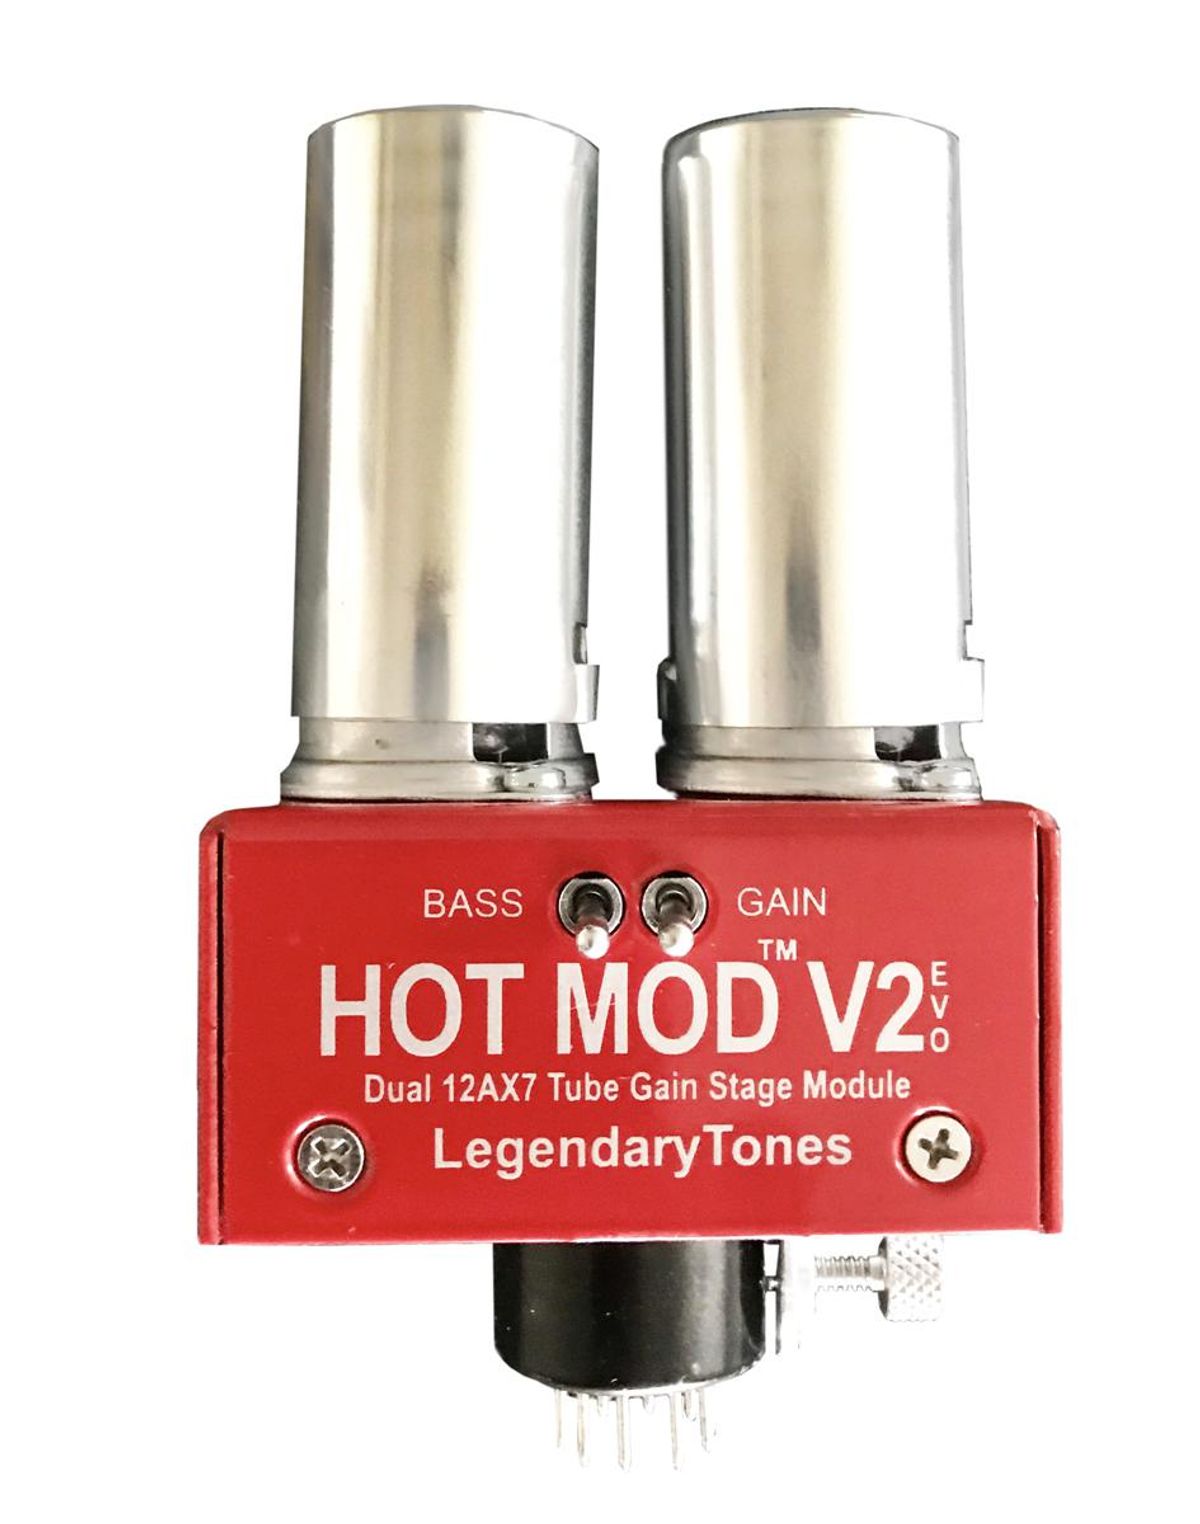 Legendary Tones Releases the Hot Mod V2 EVO